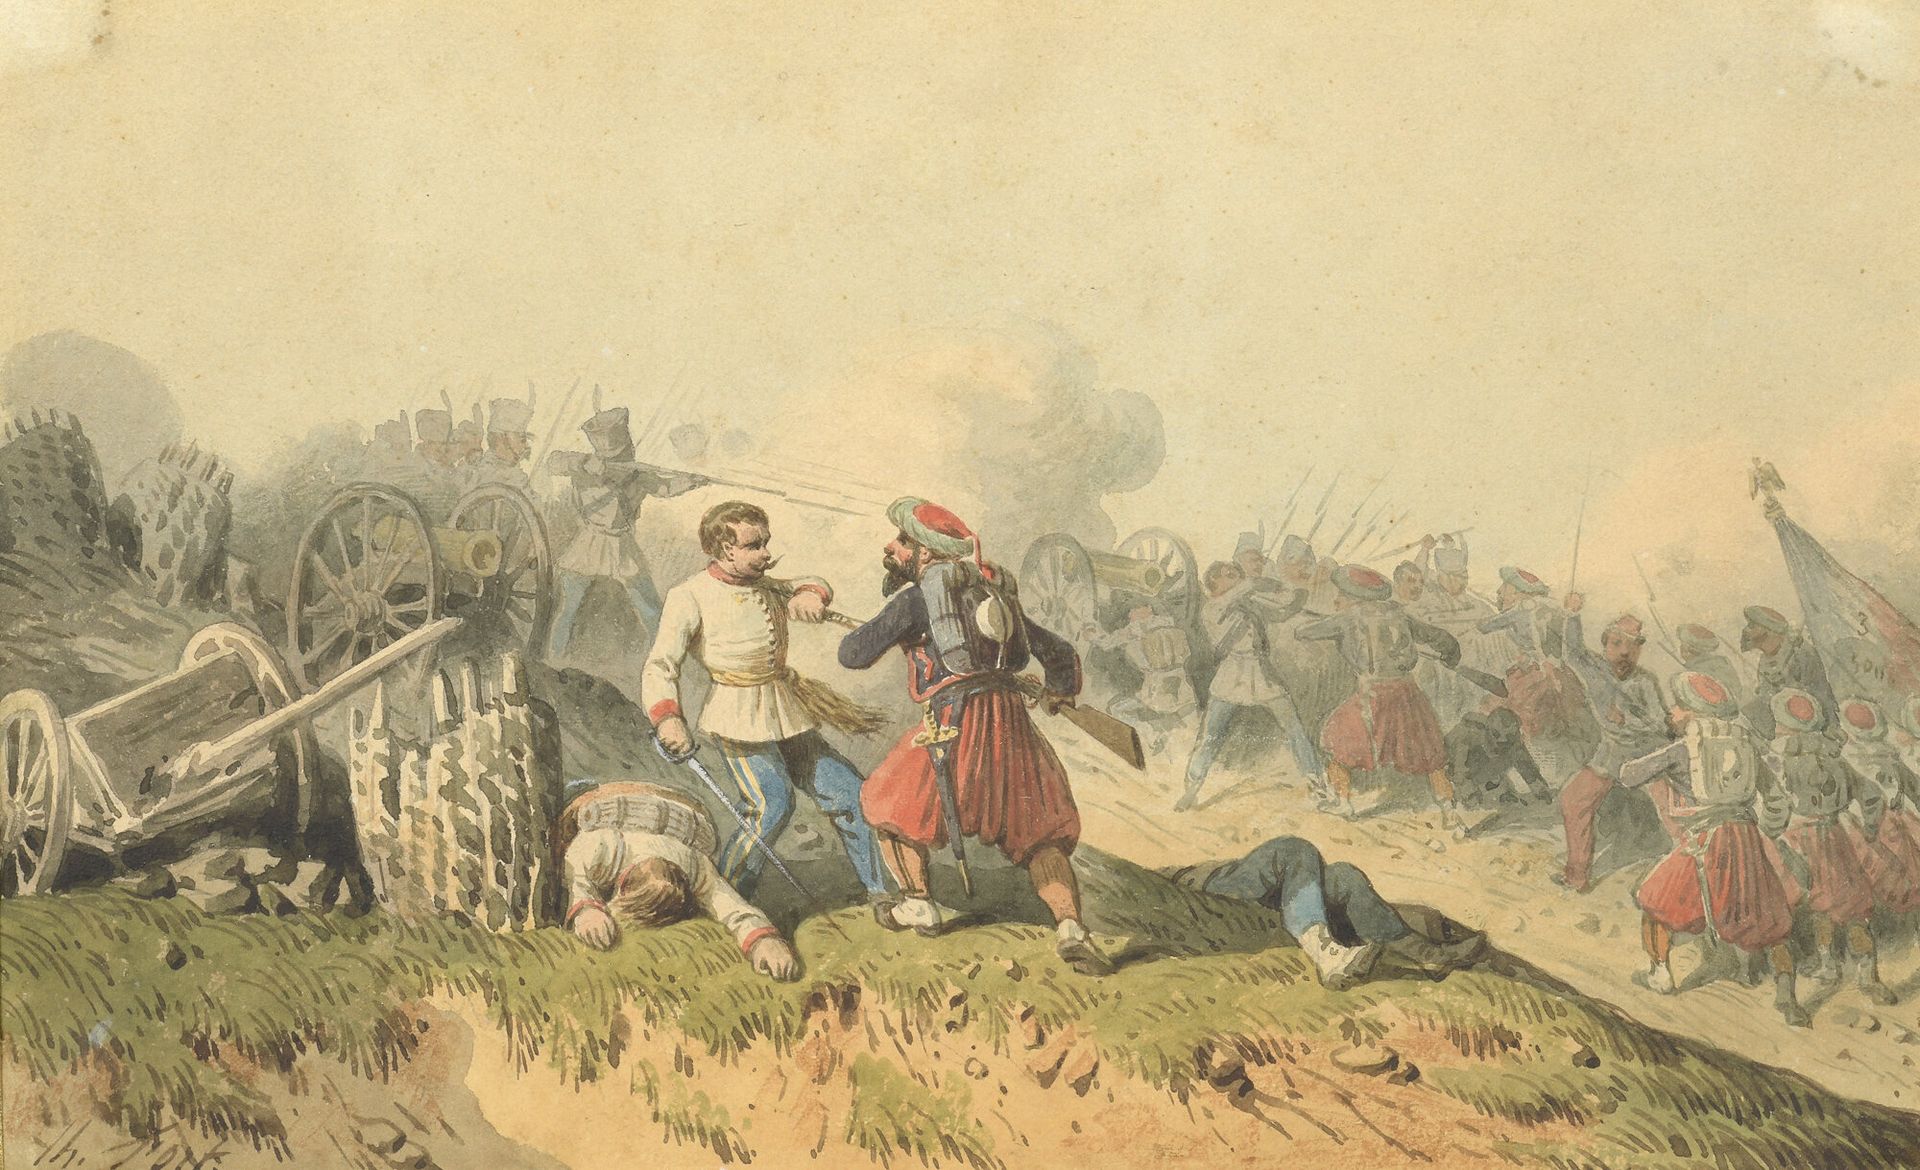 Null 西奥多-福特(1810-1896)

1854年阿尔马战役中的徒步作战。

纸上水彩画。

左下角有签名。

13.5 x 22厘米